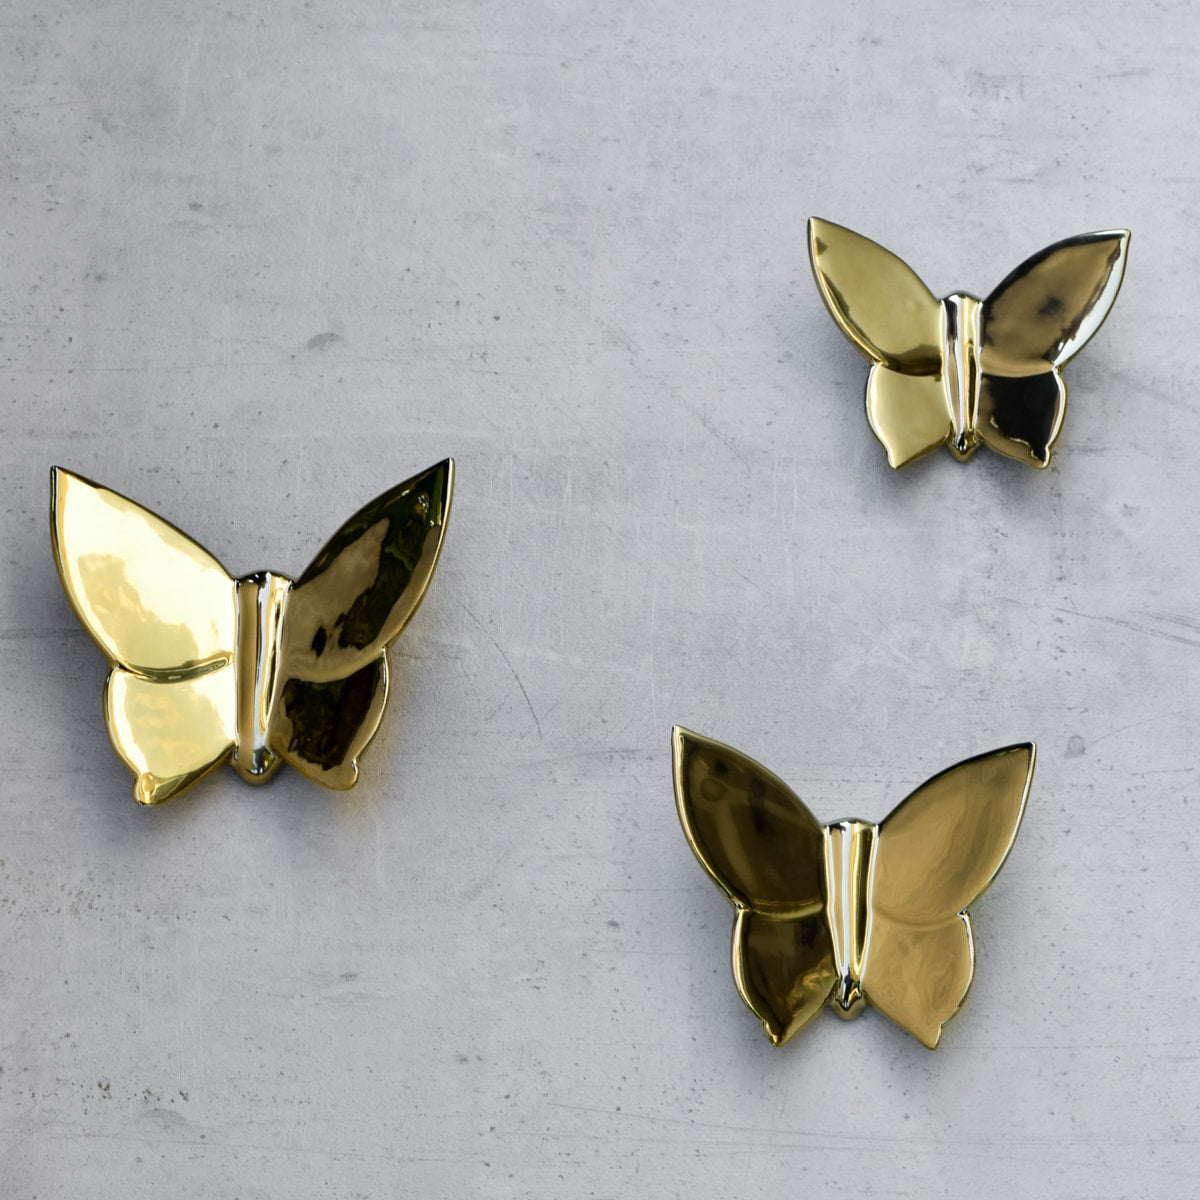 Cassidy Golden Butterfly Ceramic Wall Sculptures - Set of 3